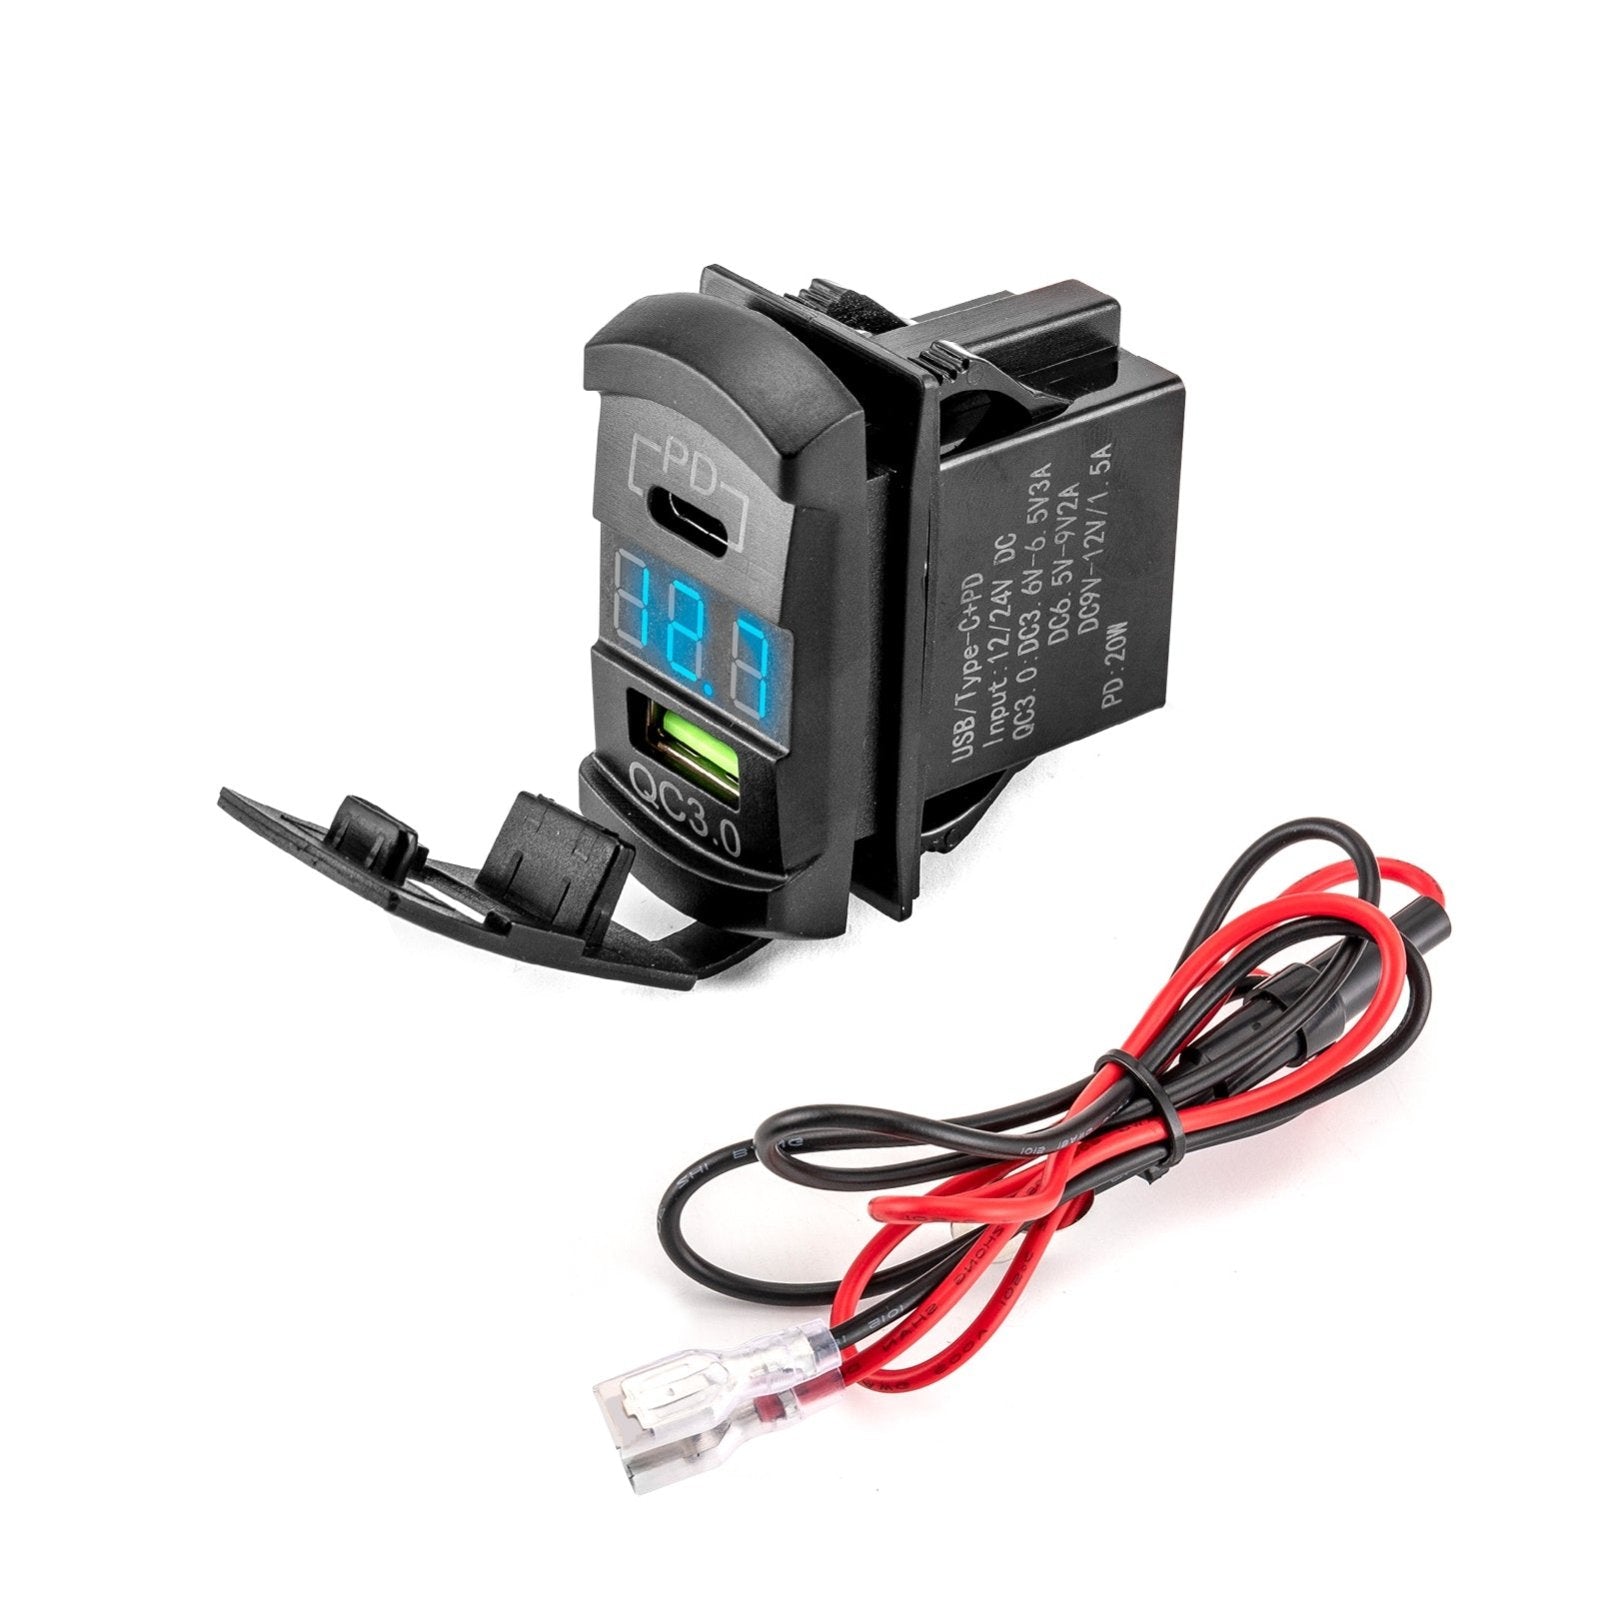 Off-road SUV ATV UTV SB Rocker Switch 12v Dual USB Charger/Outlet USB C w/ LED Voltmeter Display - Weisen